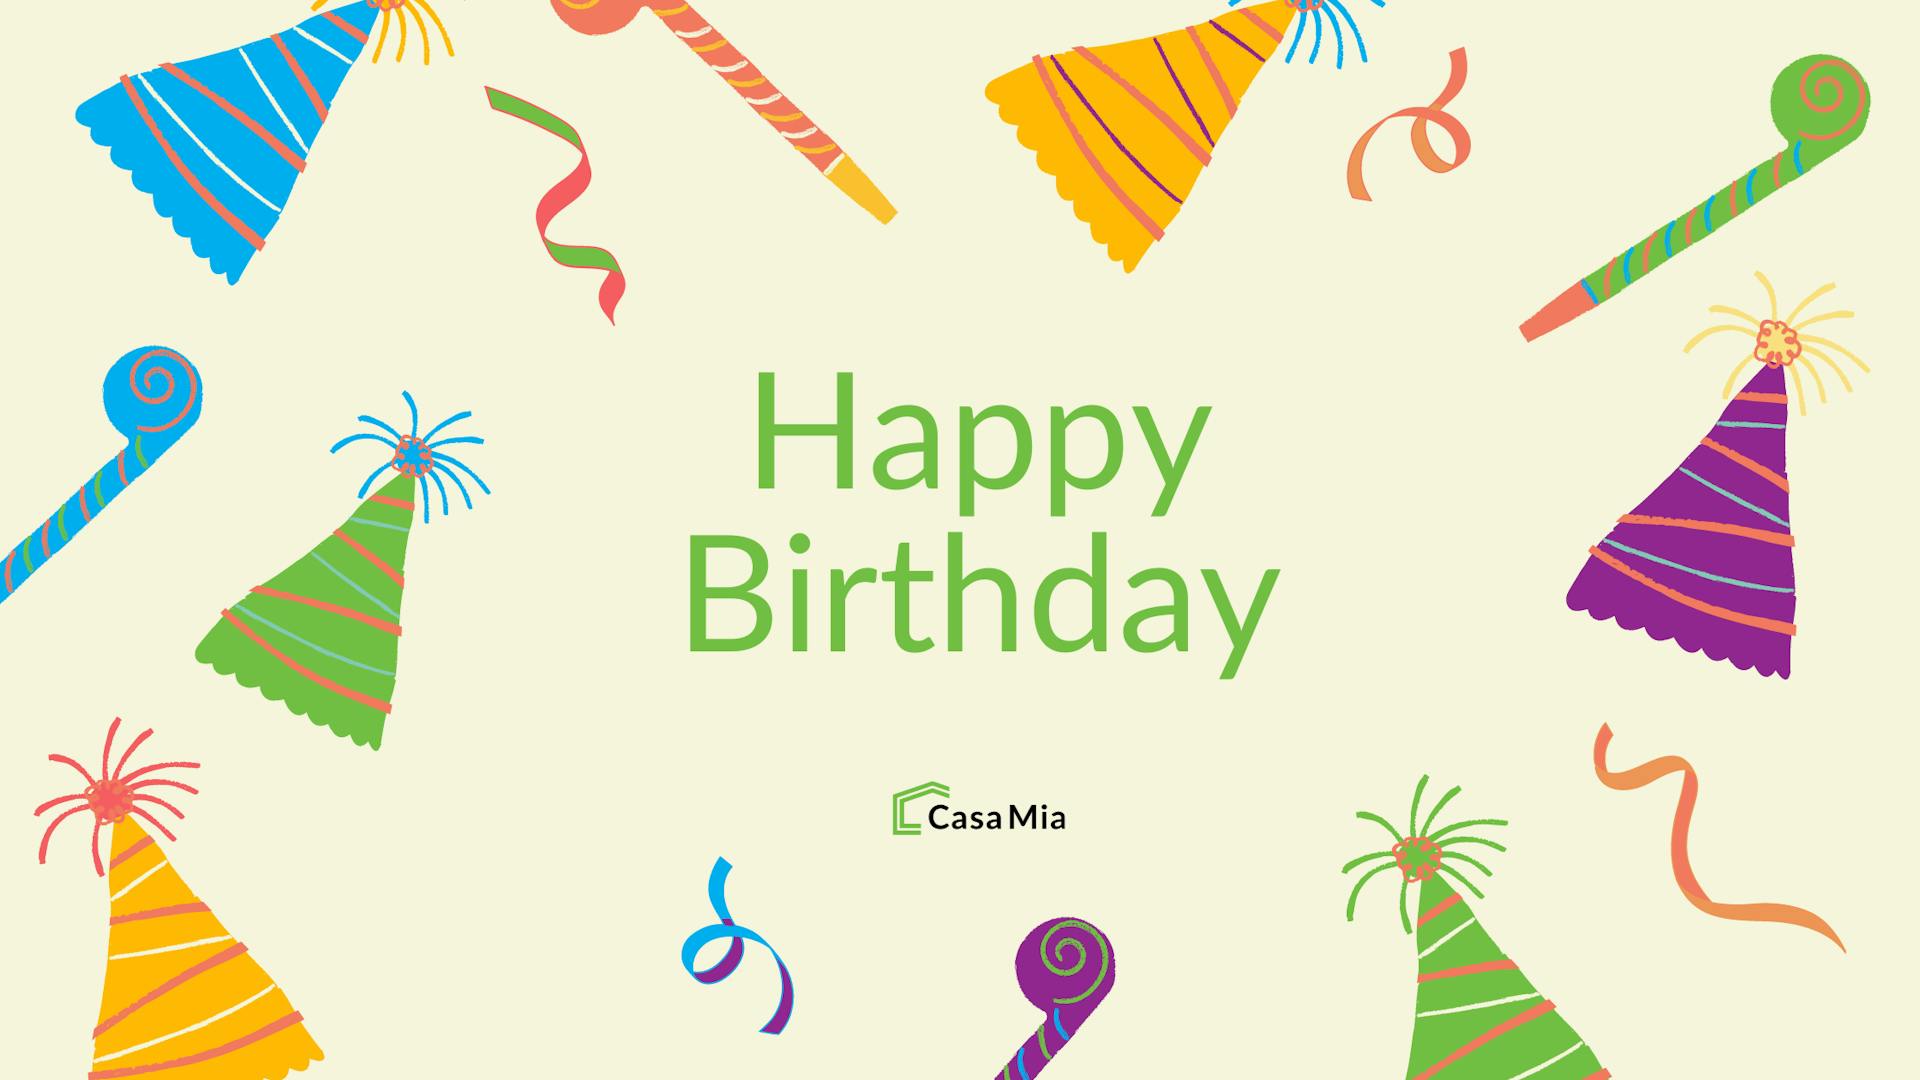 Casa Mia Coliving Birthday Card